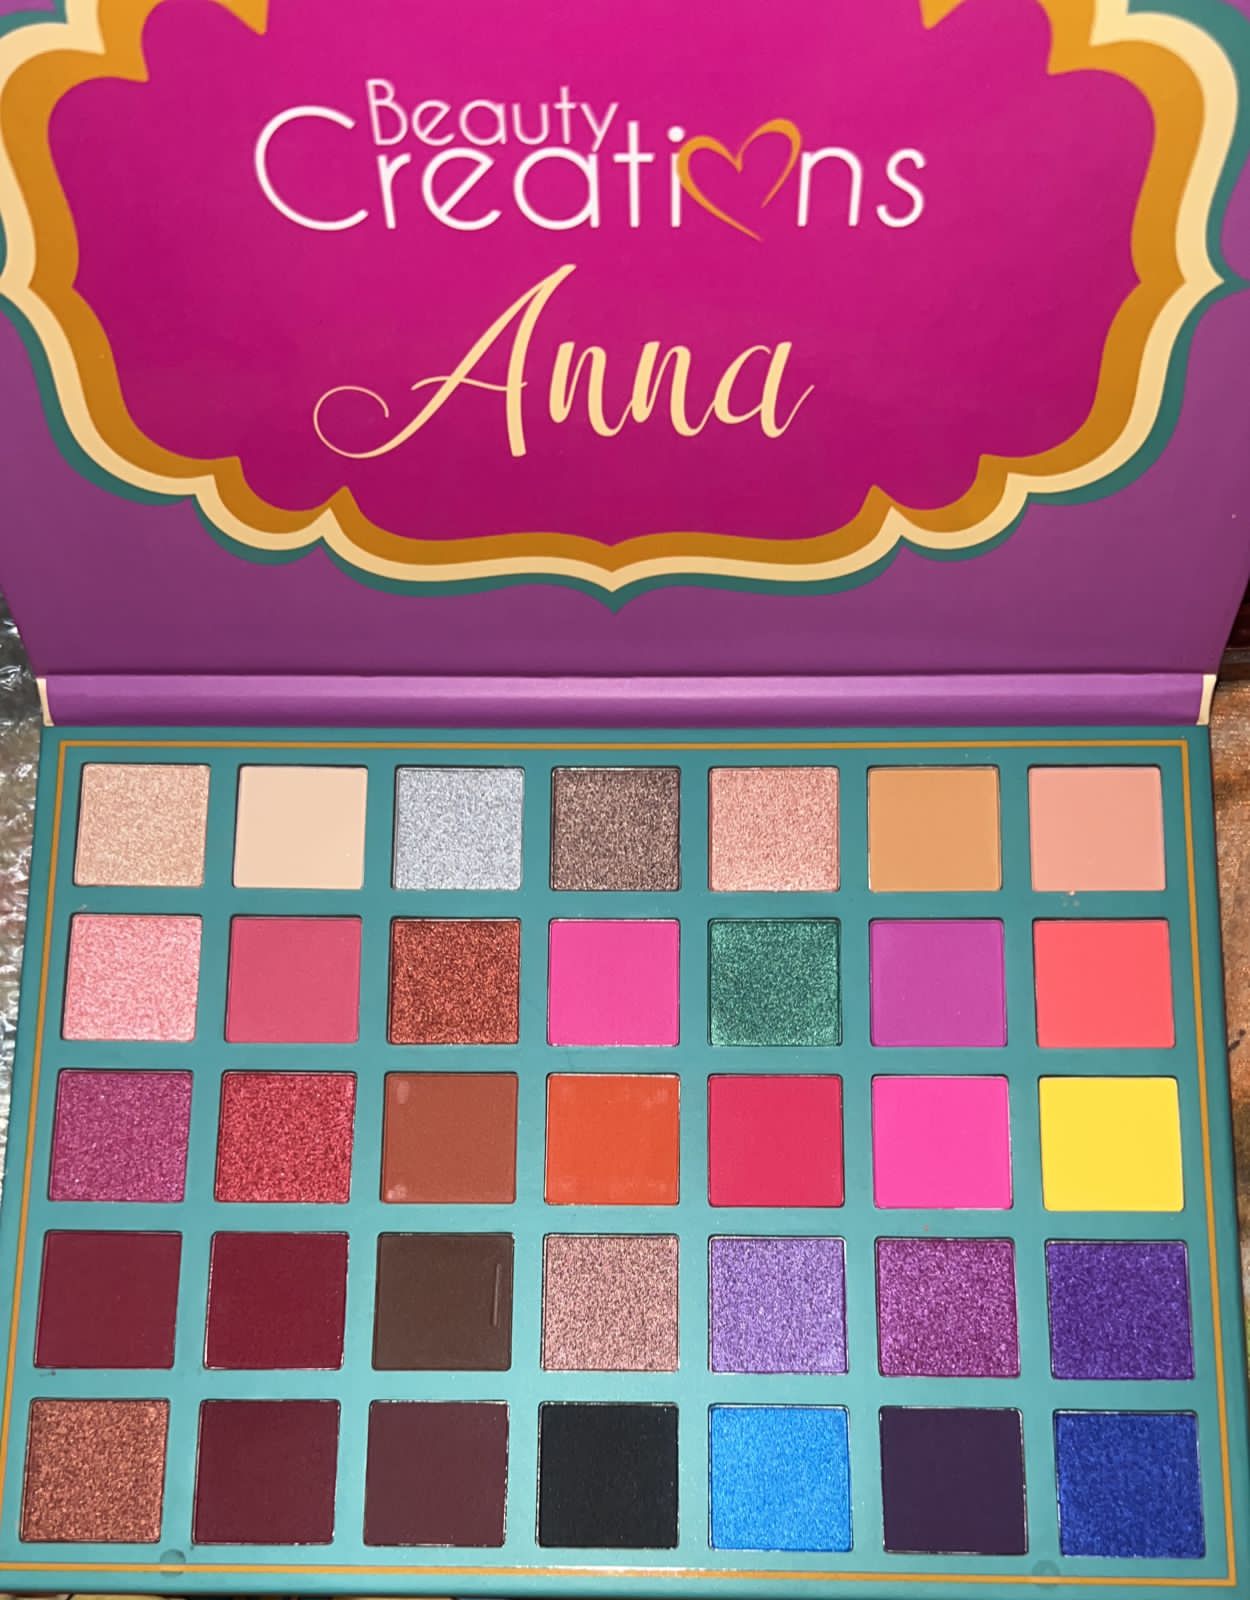 Paleta de sombras Anna Beauty Creations - Ideal para maqui